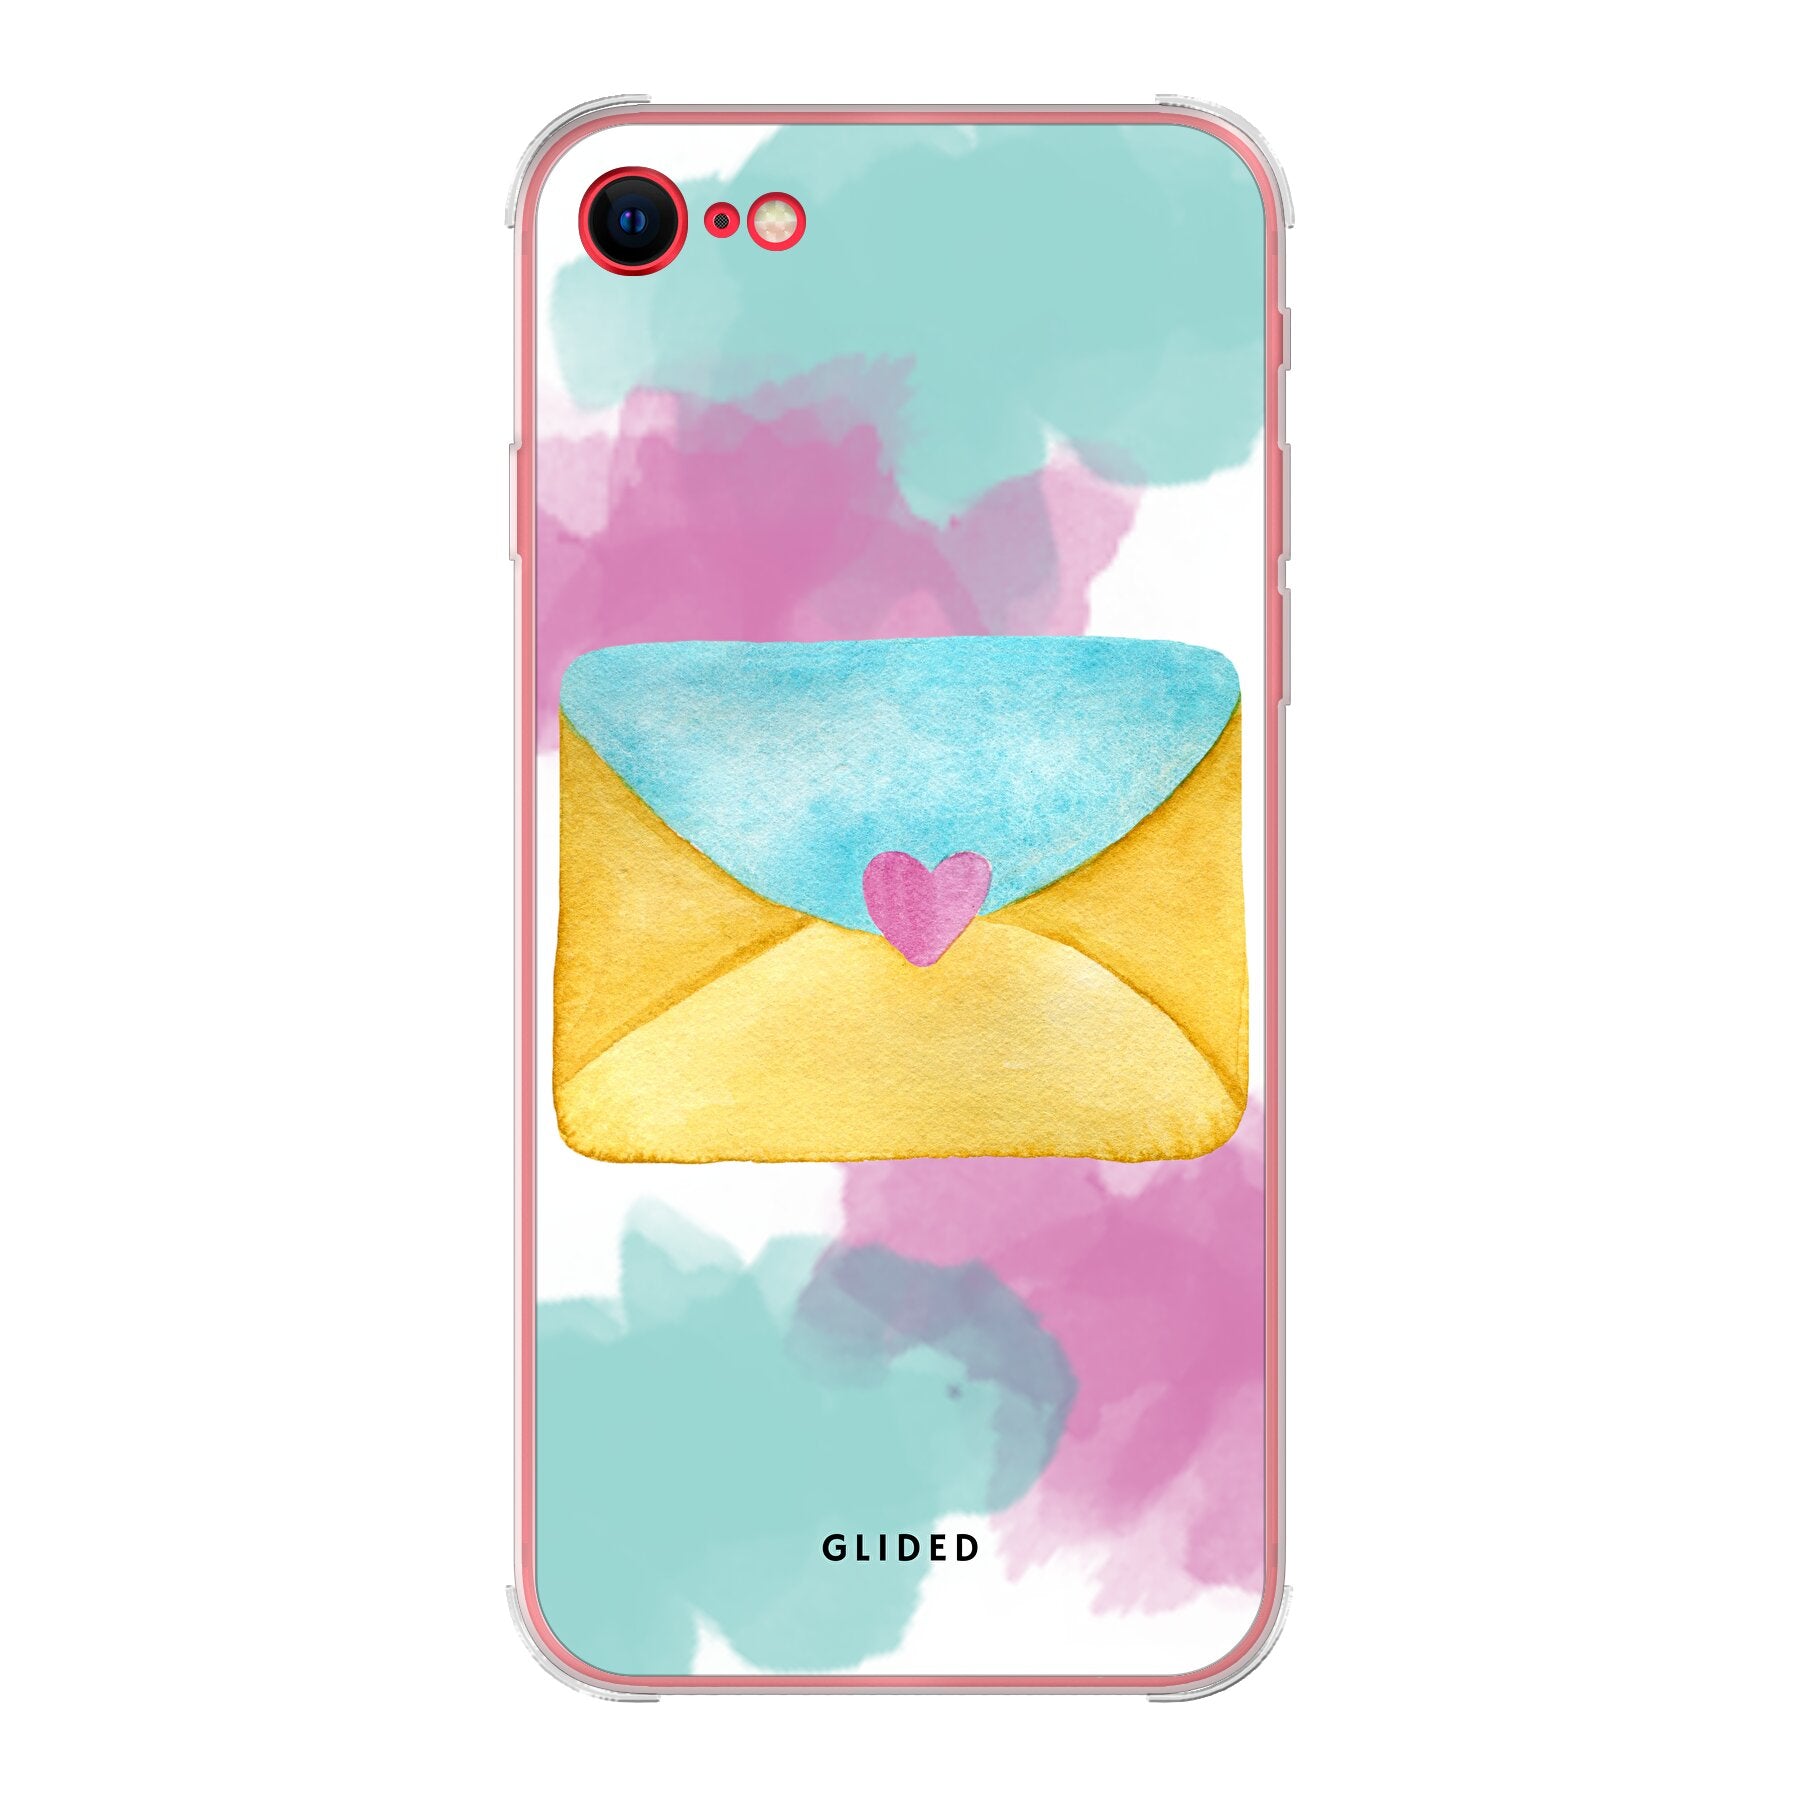 Envelope - iPhone SE 2022 - Bumper case